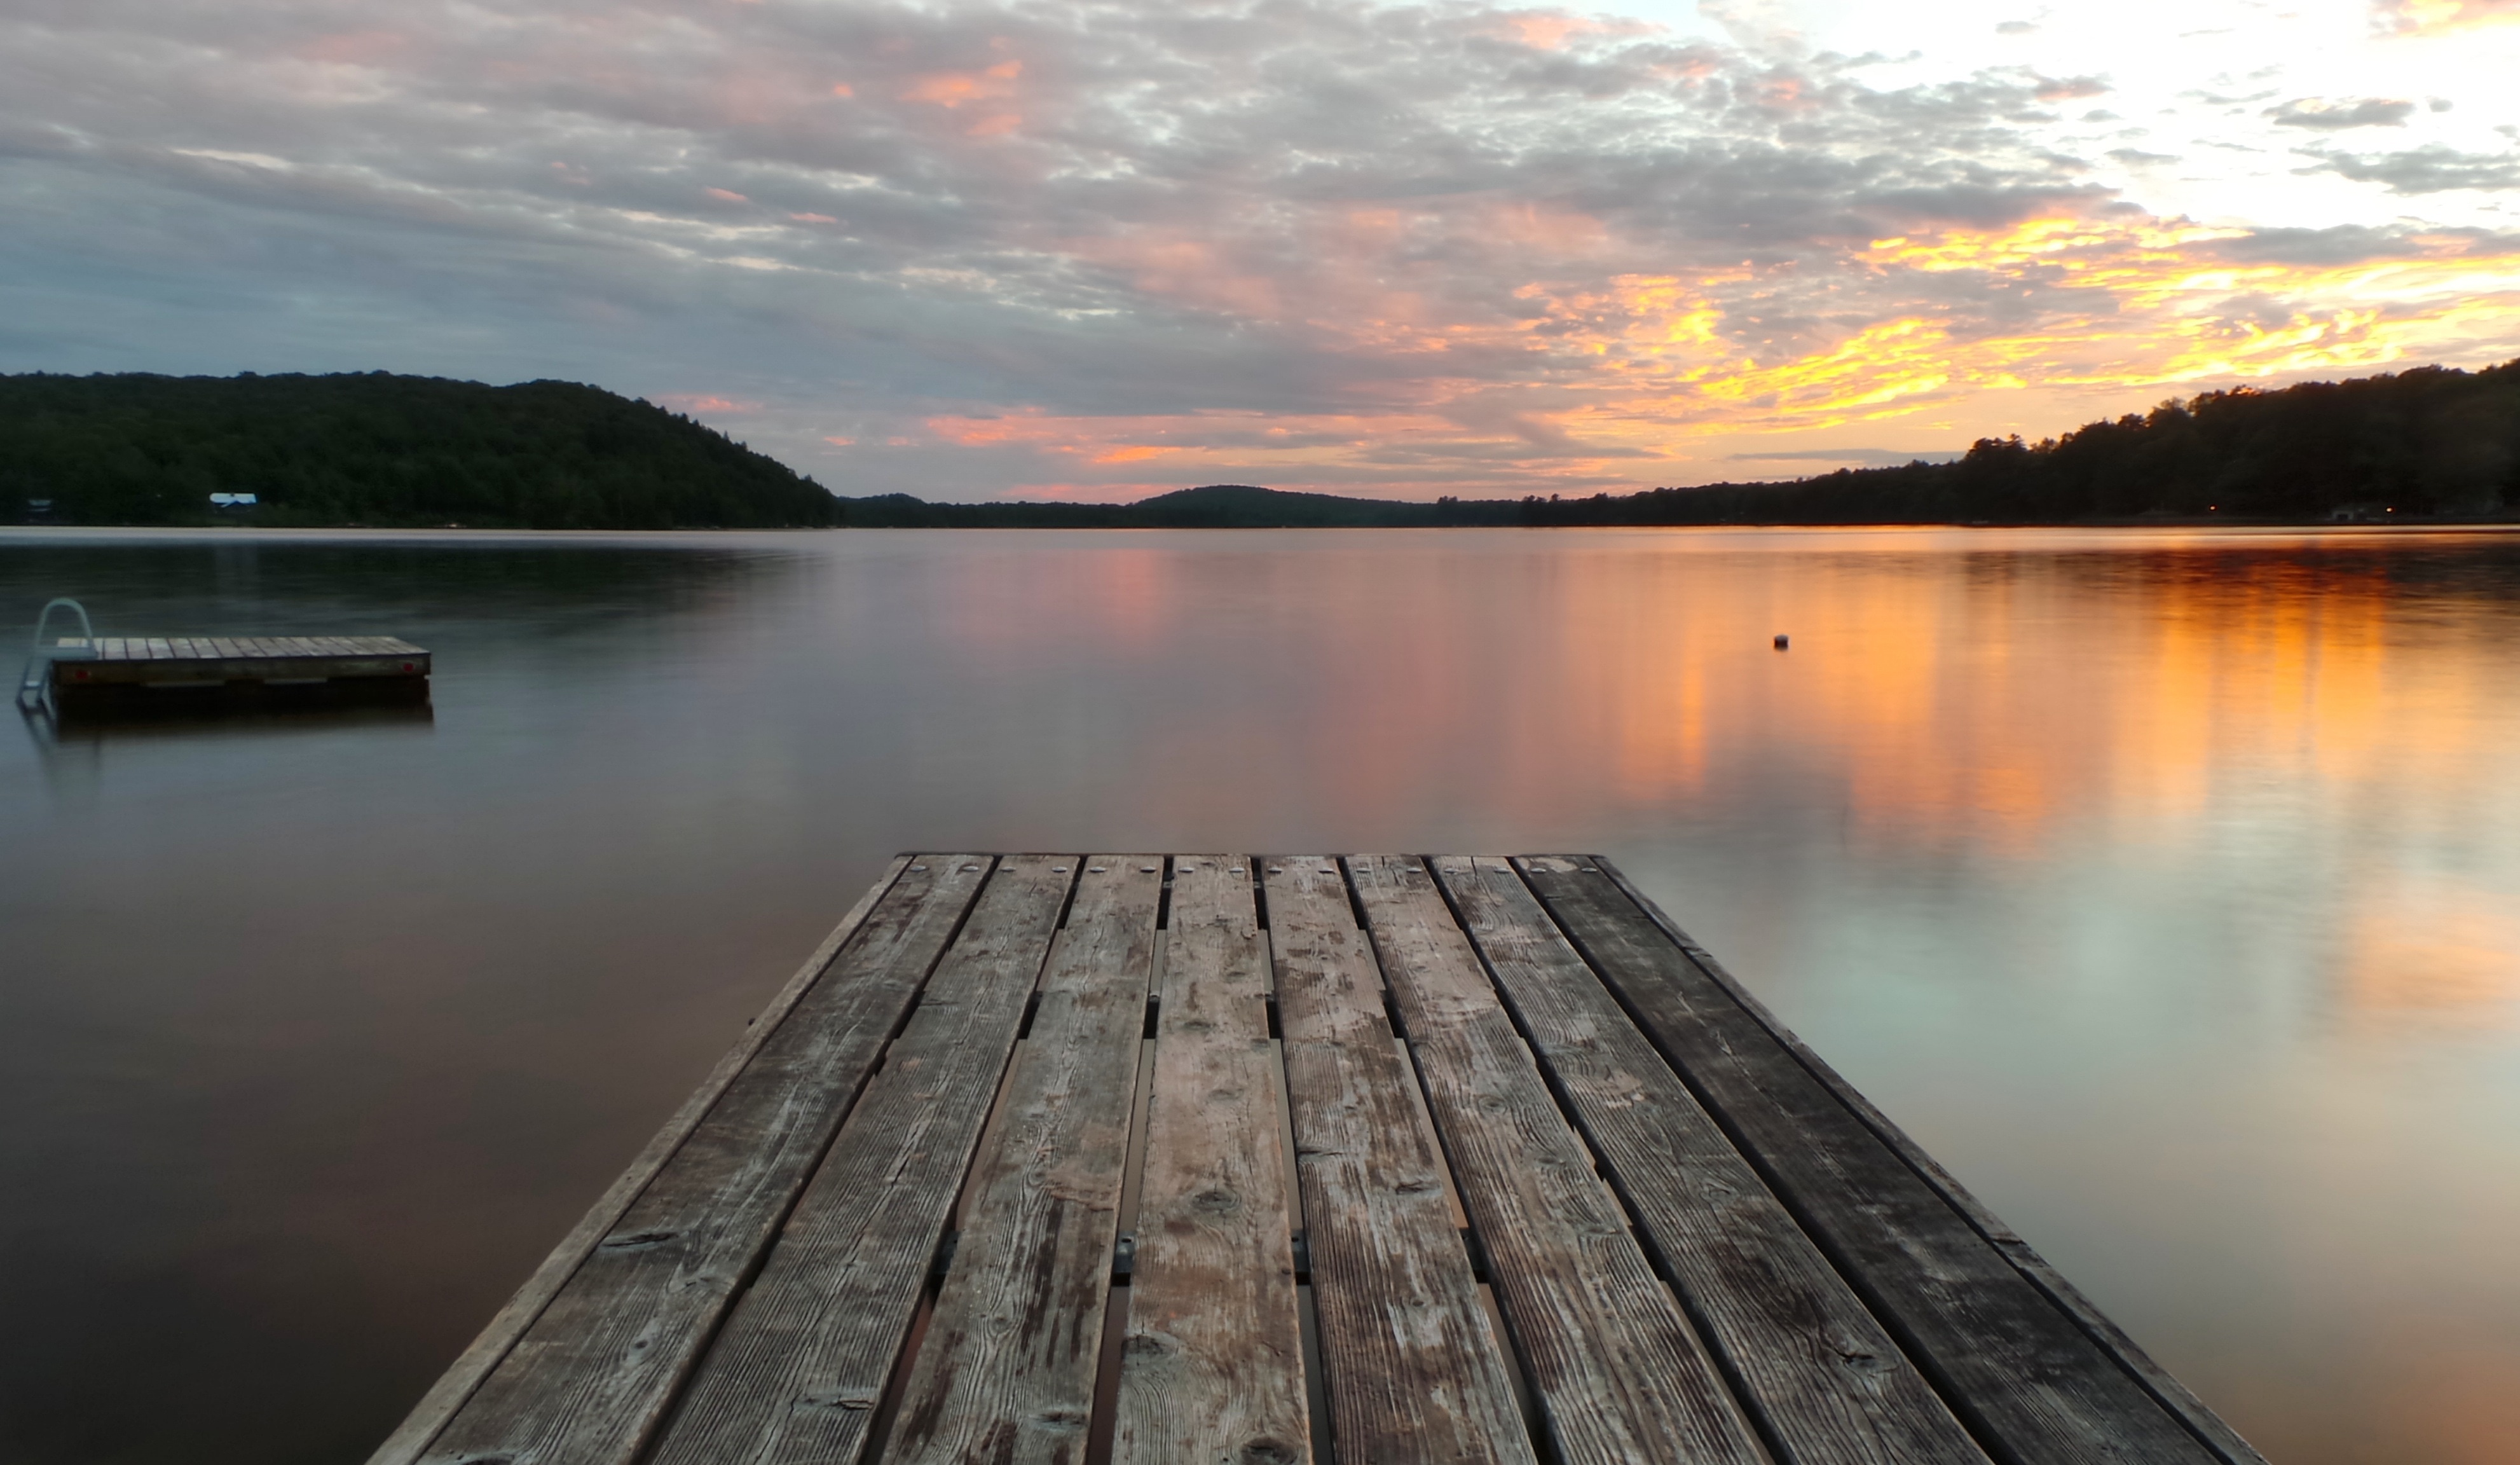 gray wooden boardwalk in front of lake near forest